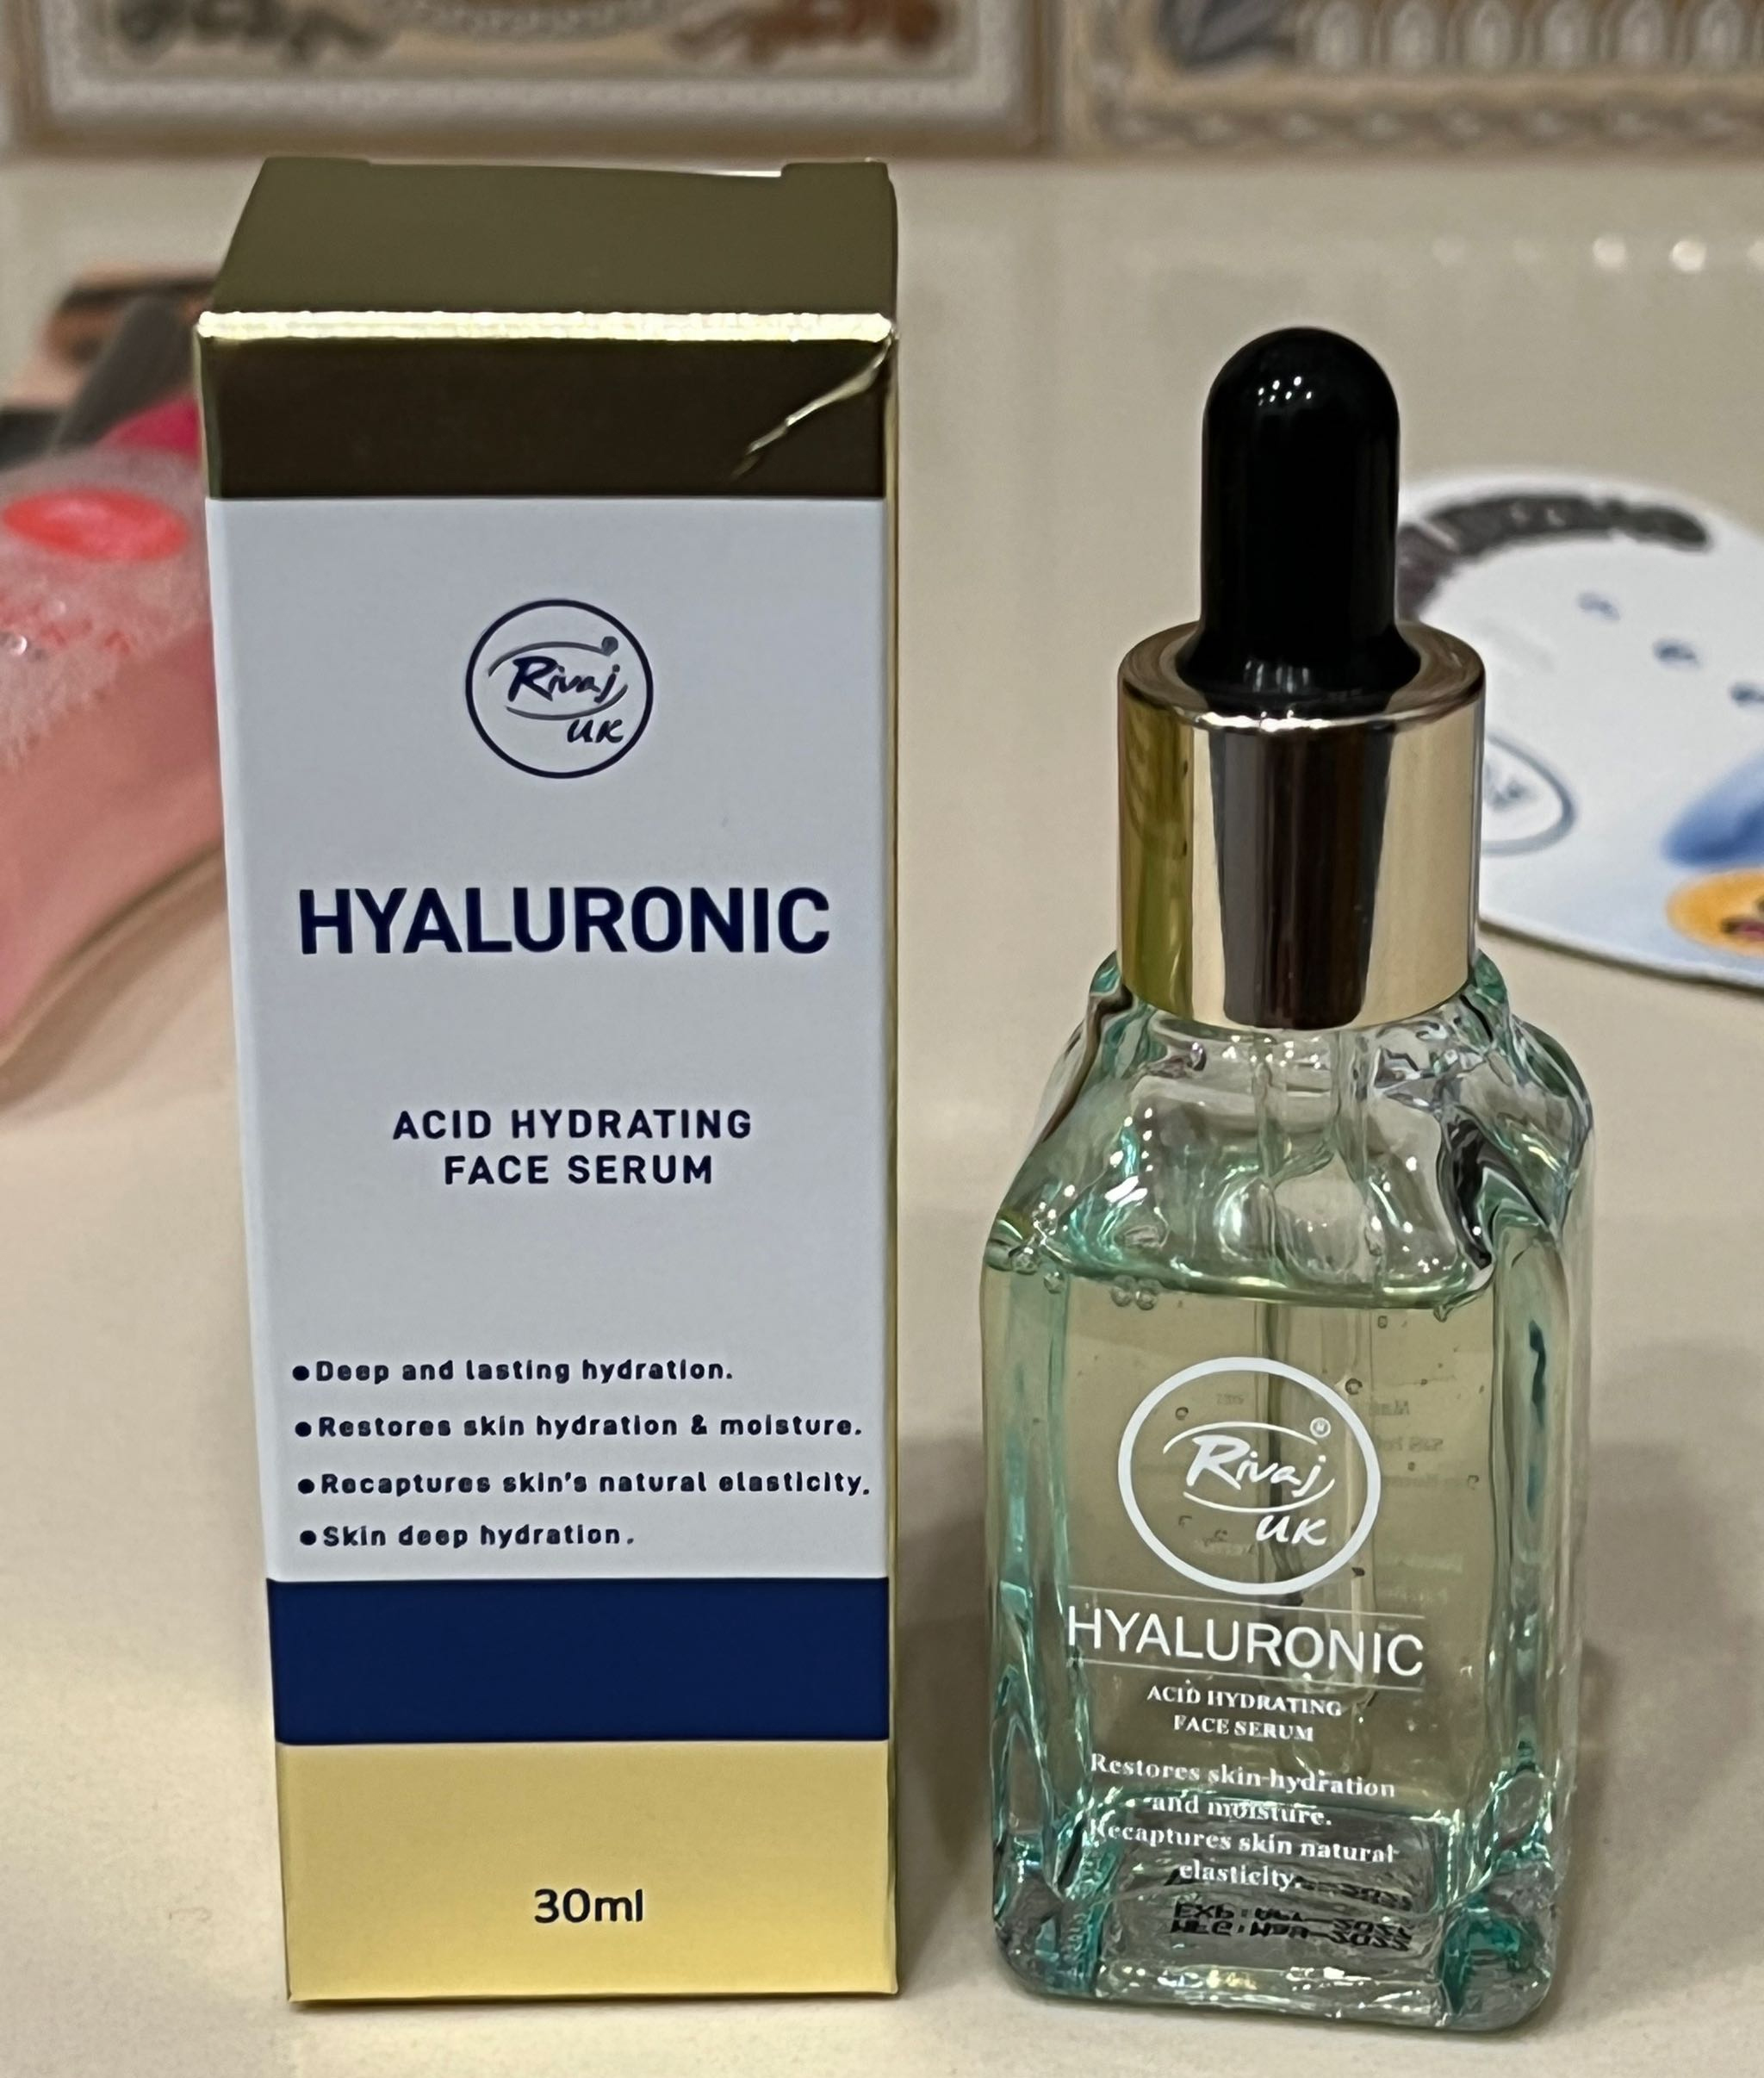 Rivaj Uk Hyaluronic Acid Hydrating Face Serum 30ml